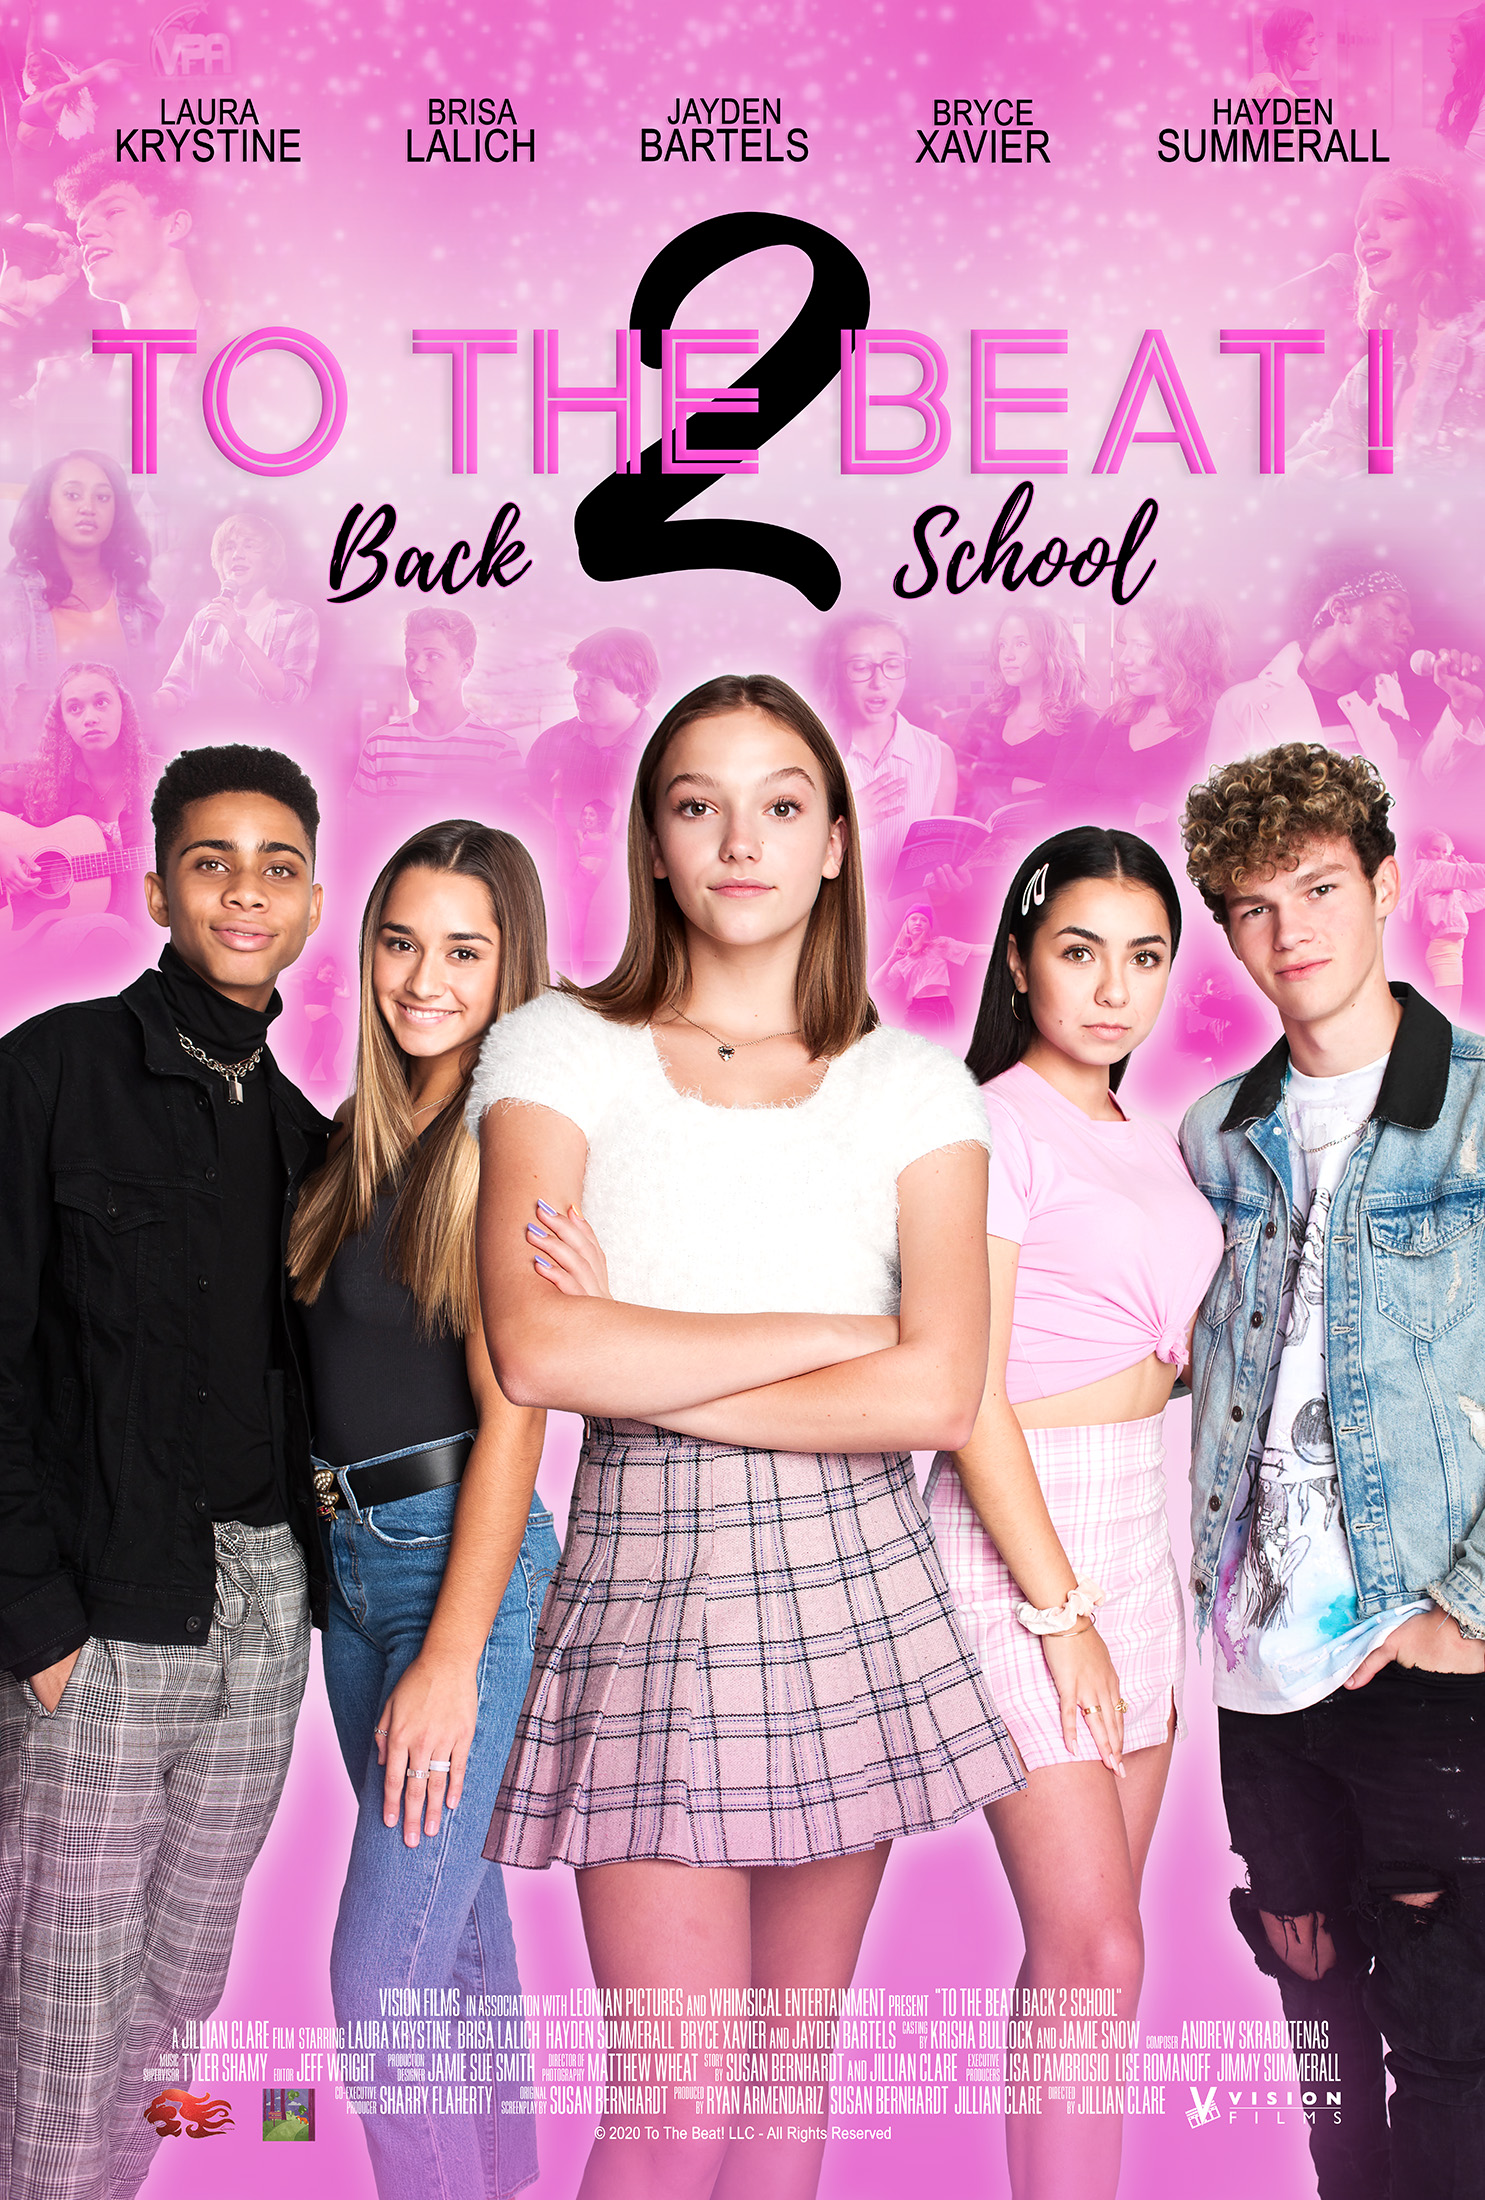 To the Beat!: Back 2 School (2020) การแข่งขัน เพื่อก้าวสู่ดาว 2 Laura Krystine